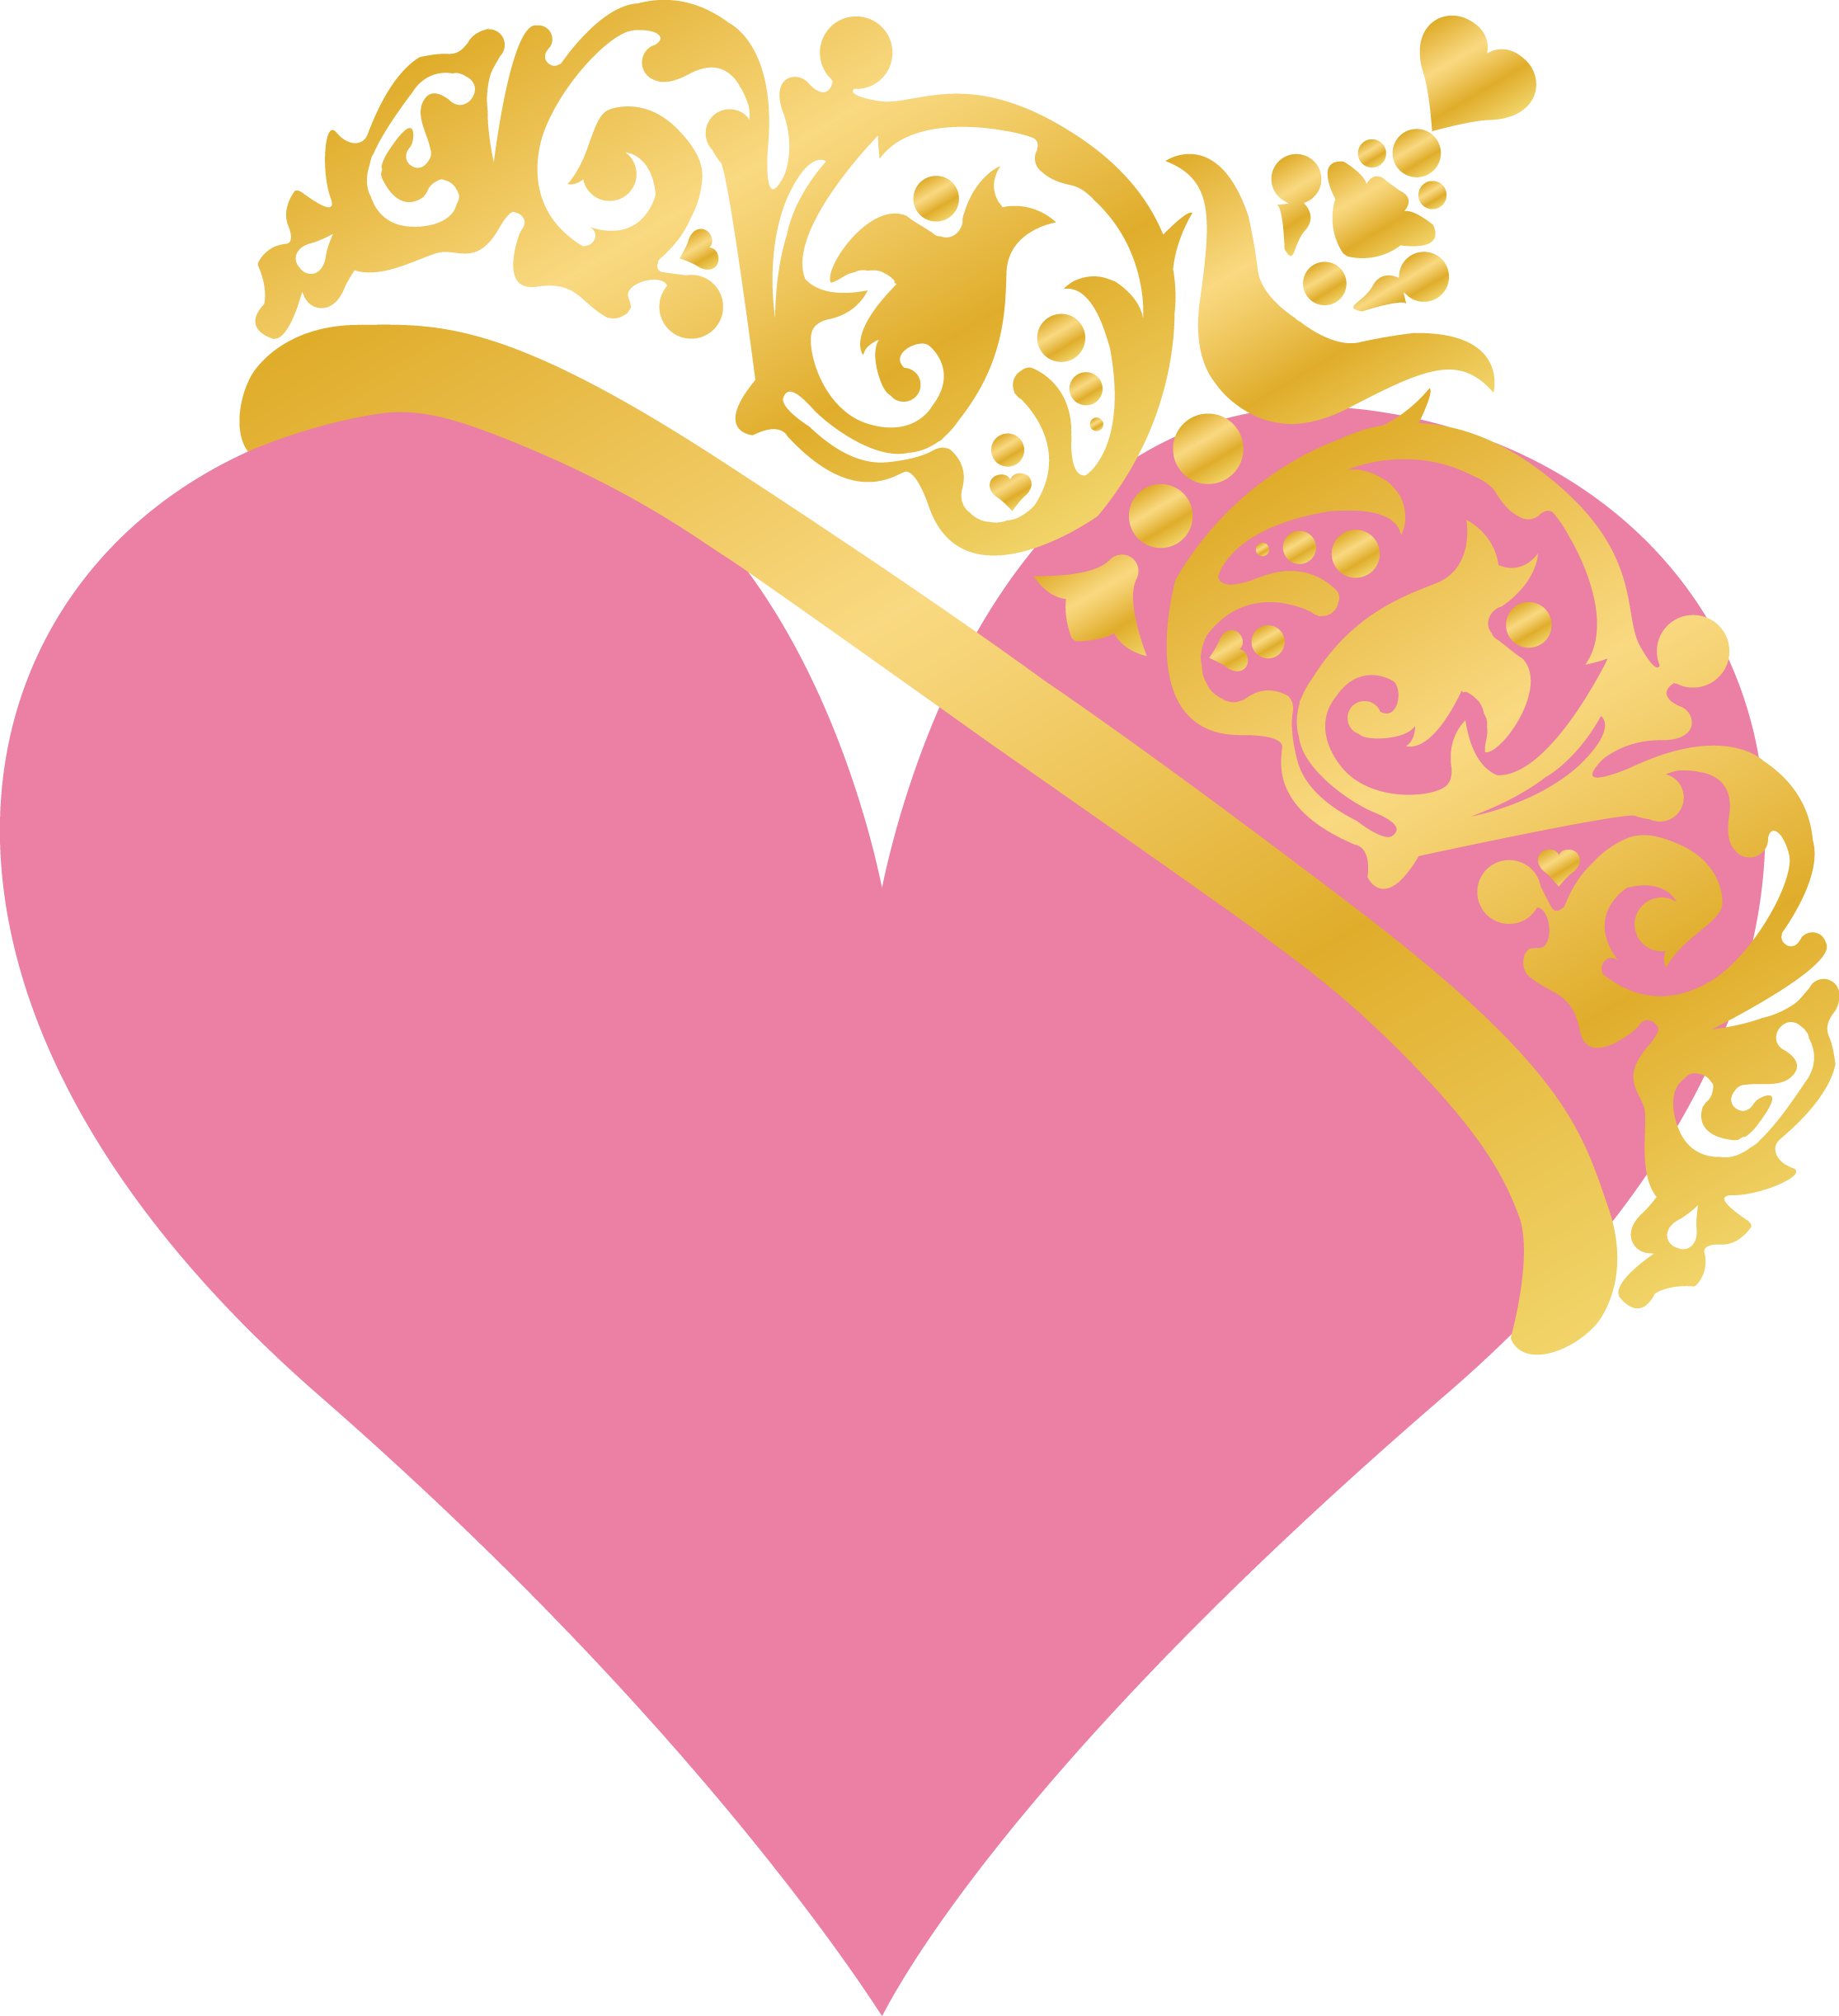 mary kay pink heart png logo #3921